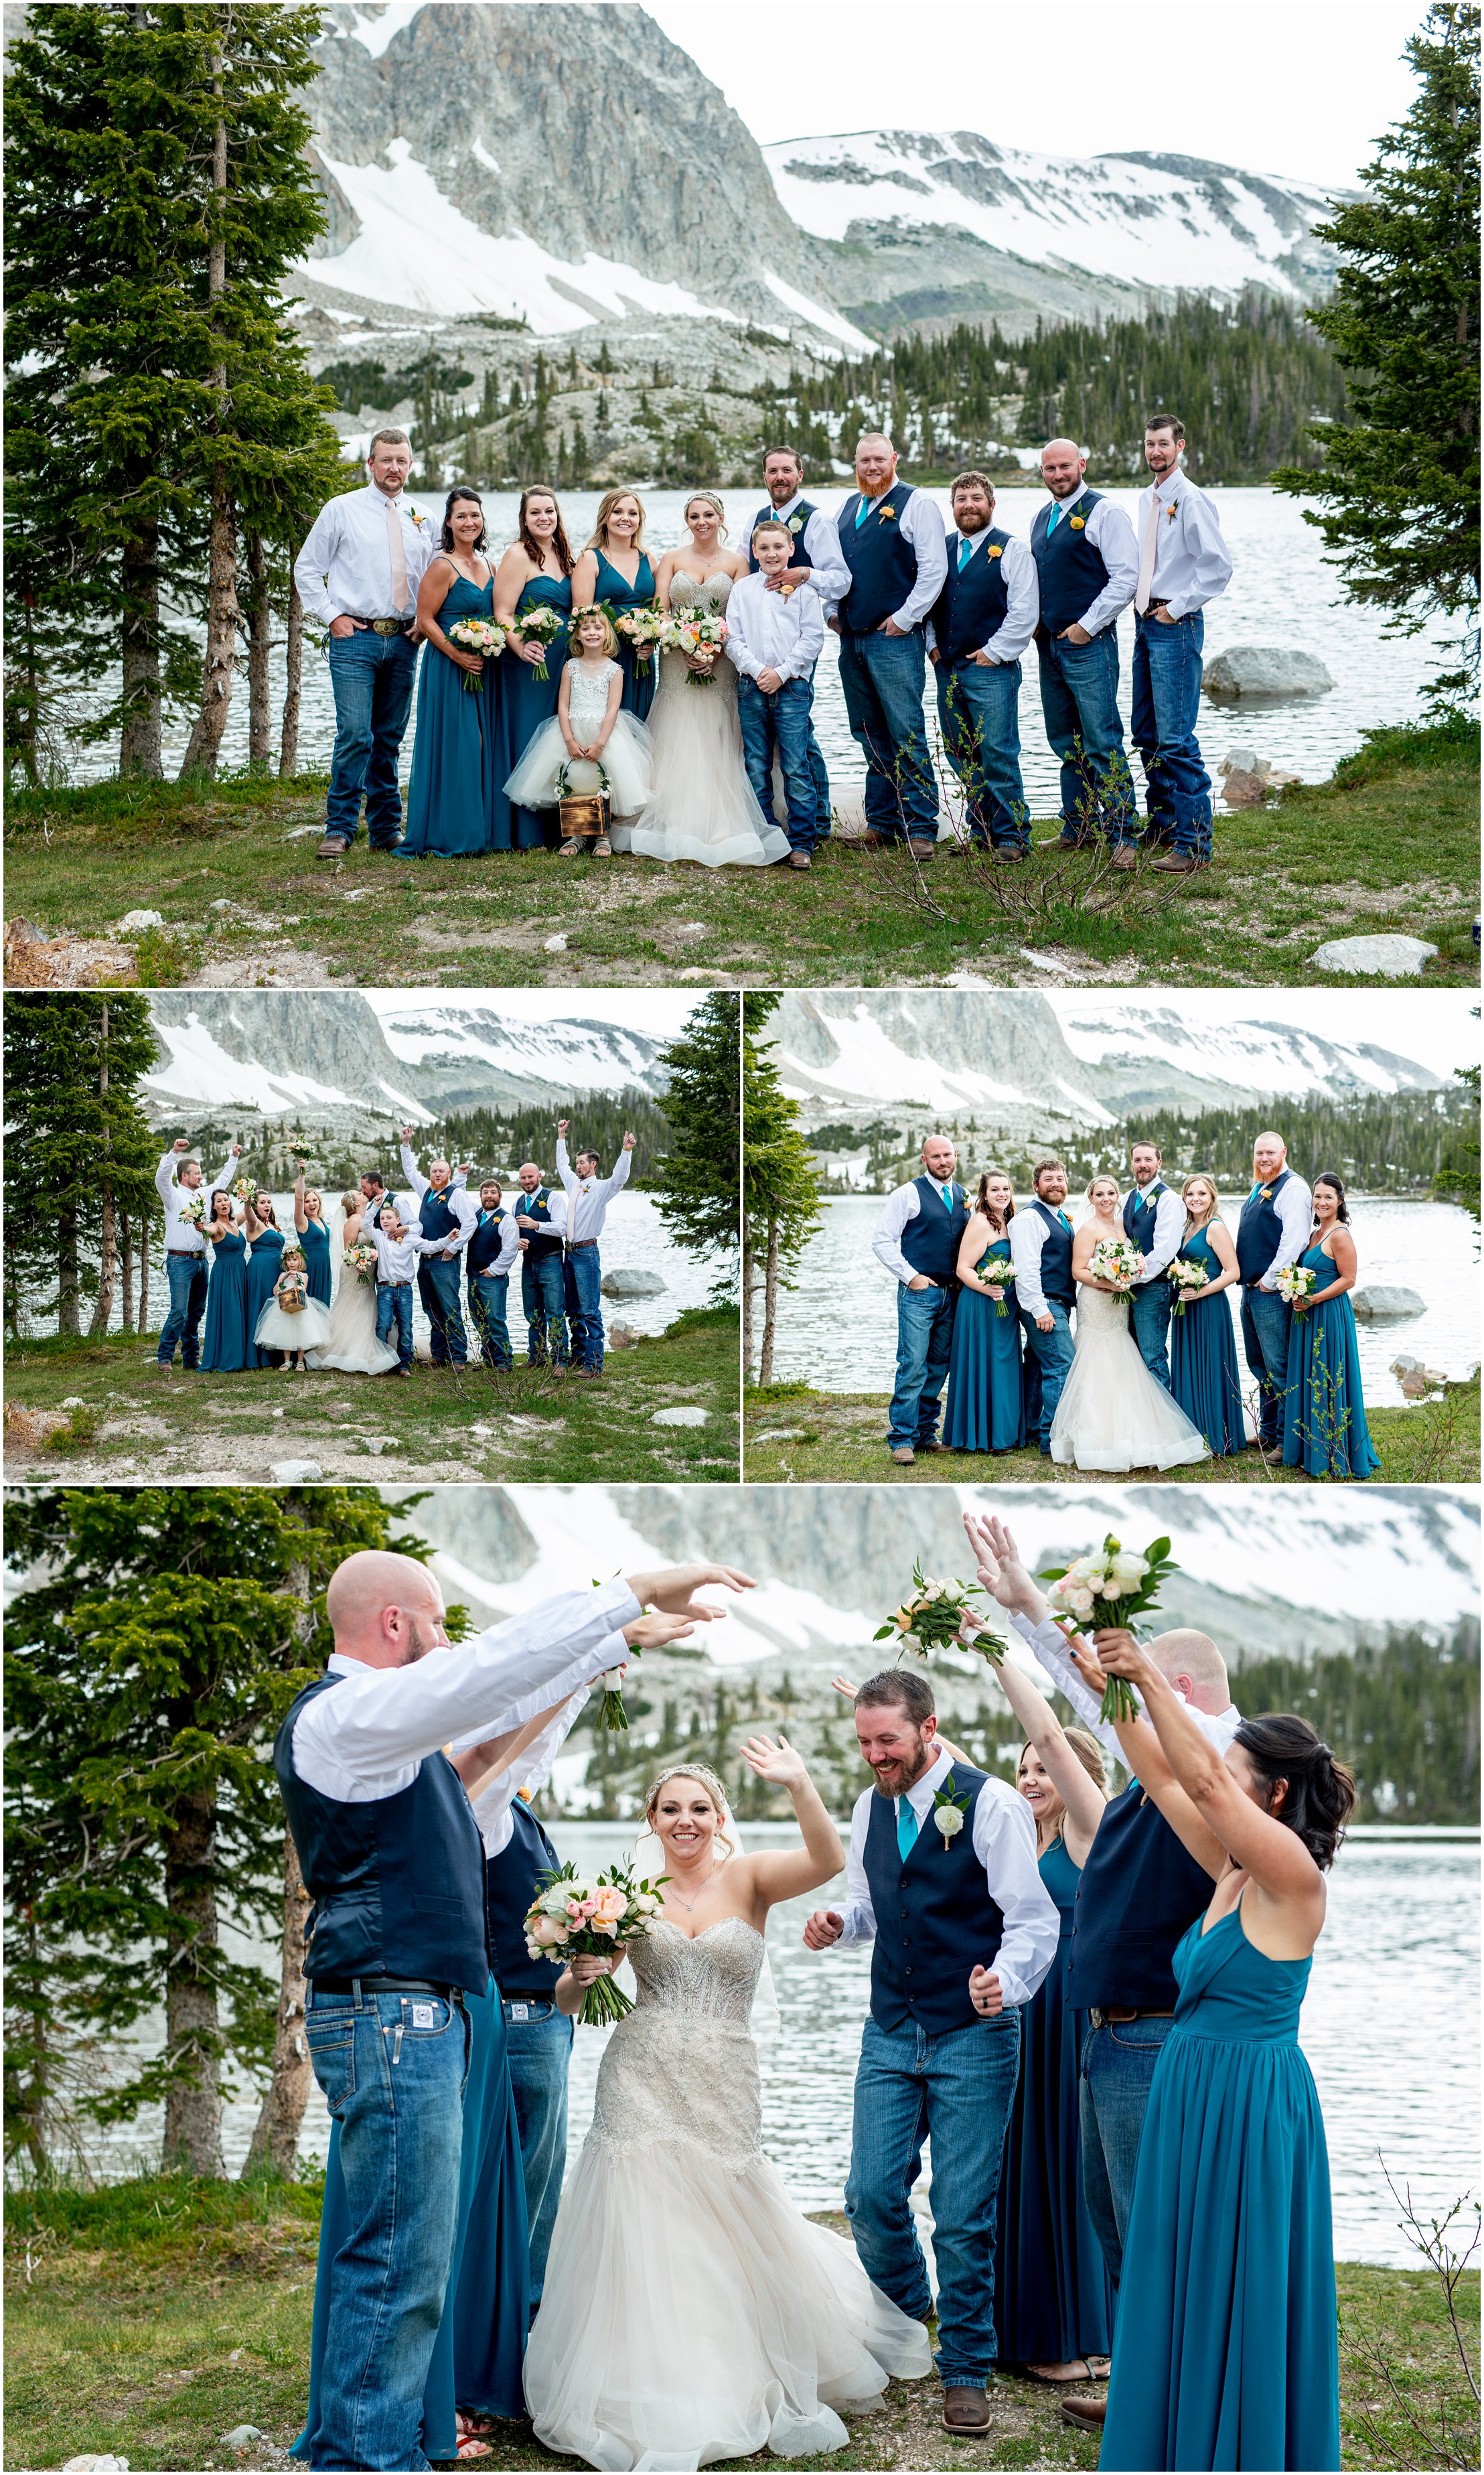 Brooklyn Lodge Wedding in the snowy mountains near centennial wyoming by wyoming wedding photographer